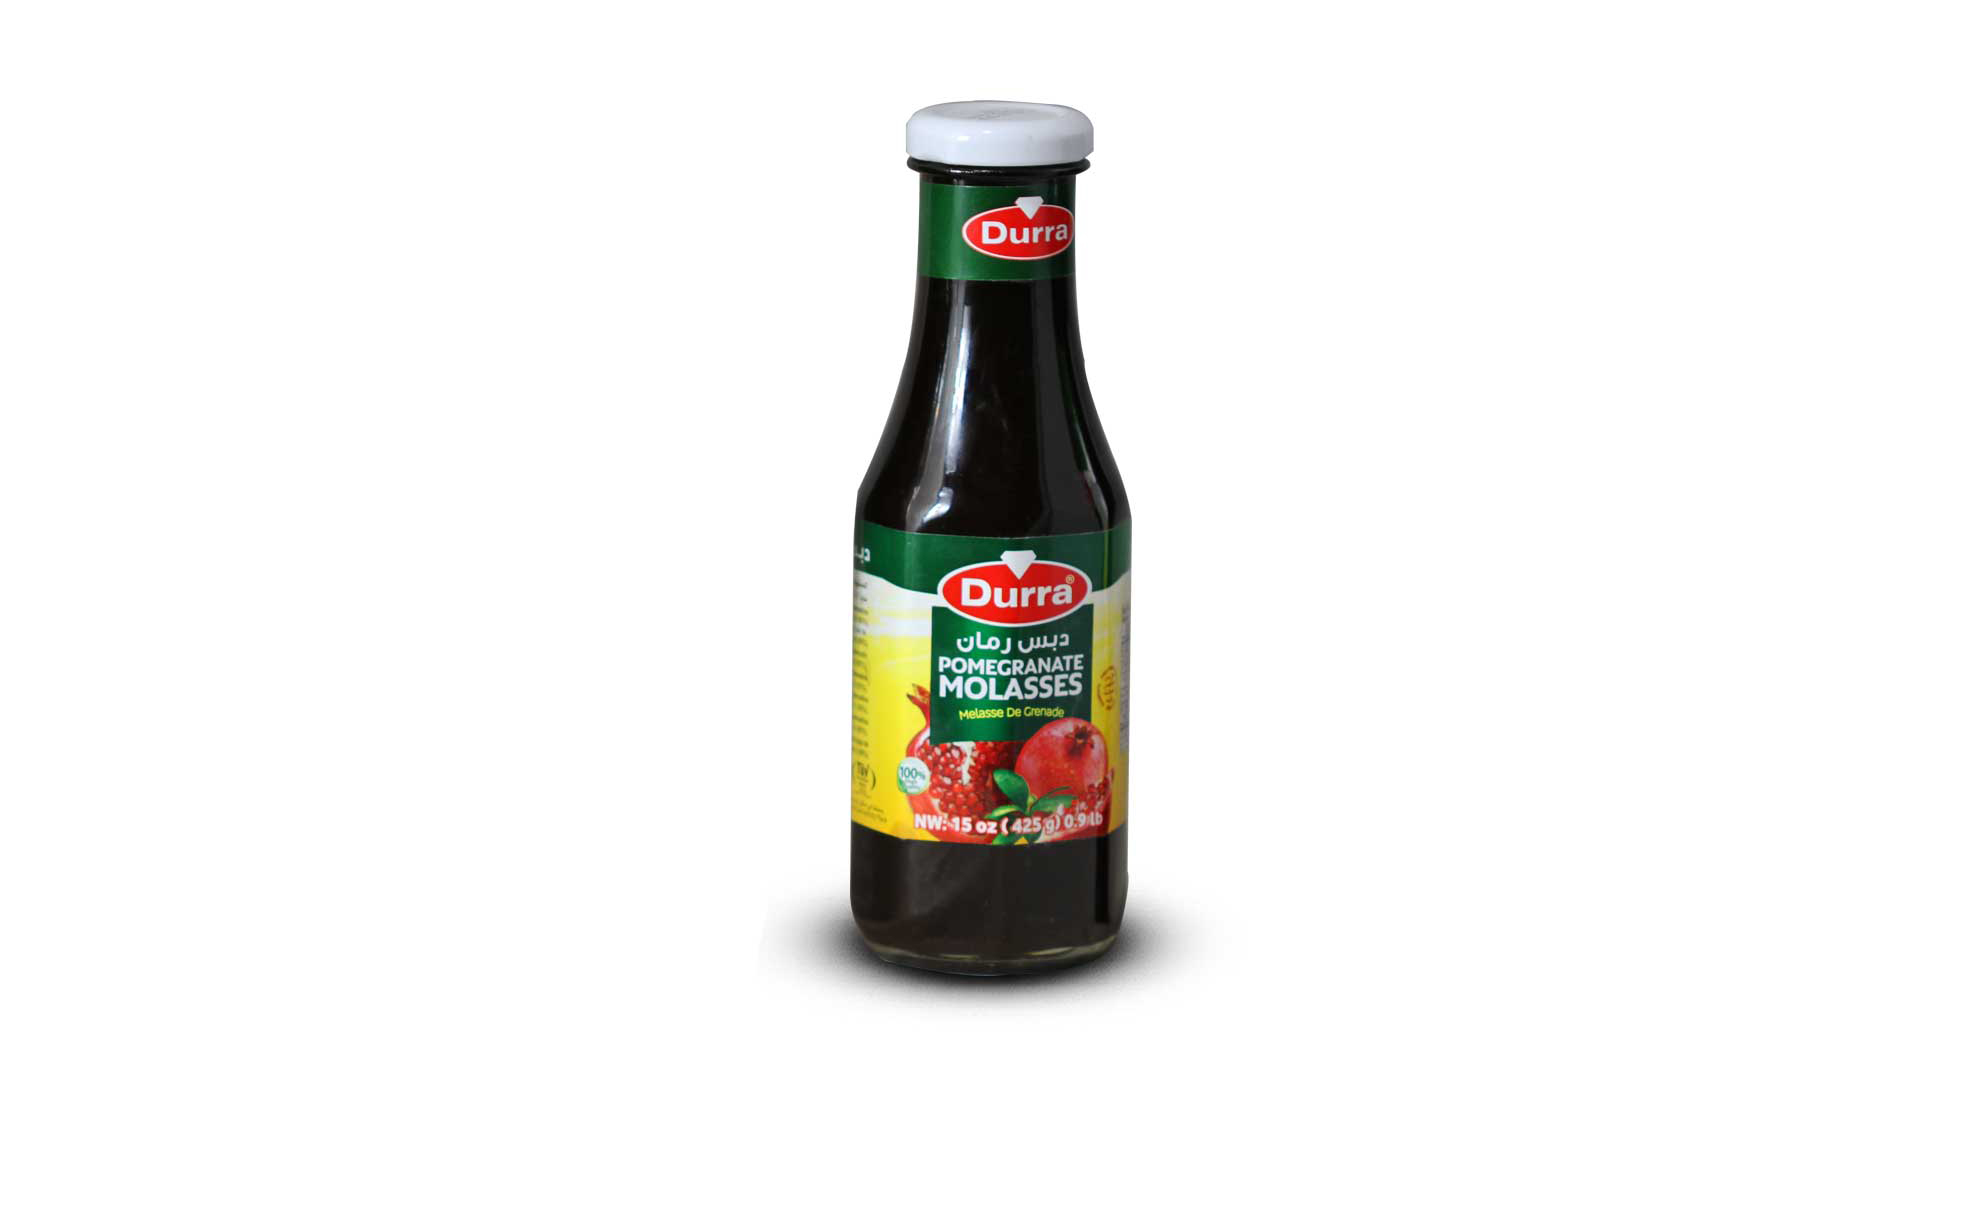 Sauce drink with clara. Гранатовый соус dobbella Grenadine Molasses. Molasses Египет. Durra продукты. Египет соус Durra hot Sauce.